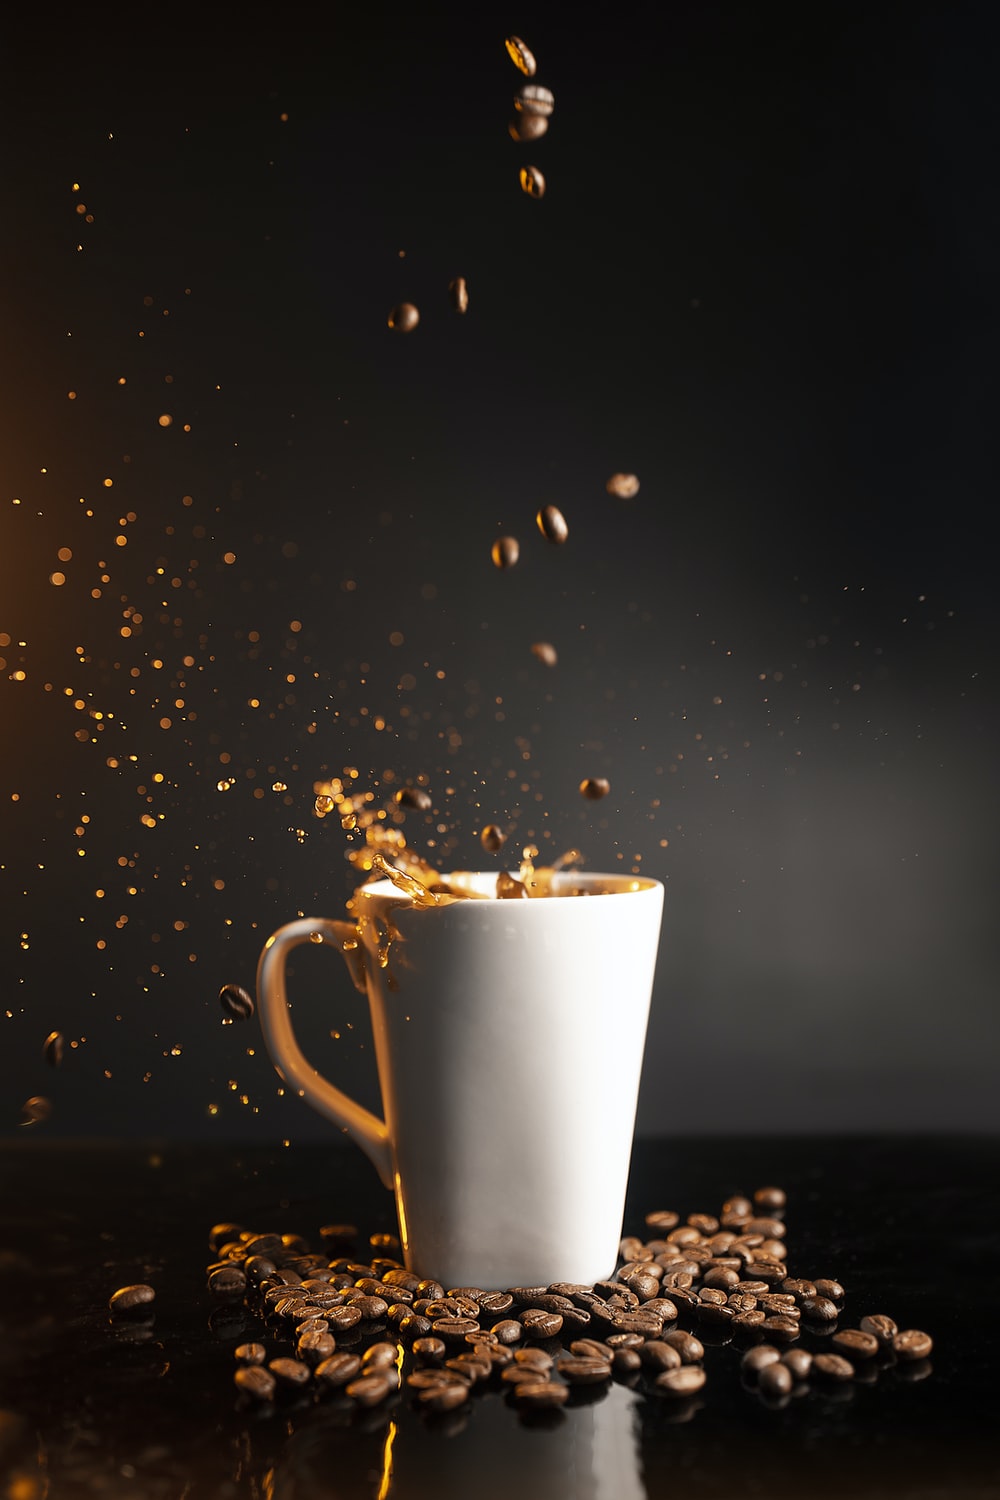 Coffee Splash Picture. Download Free Image